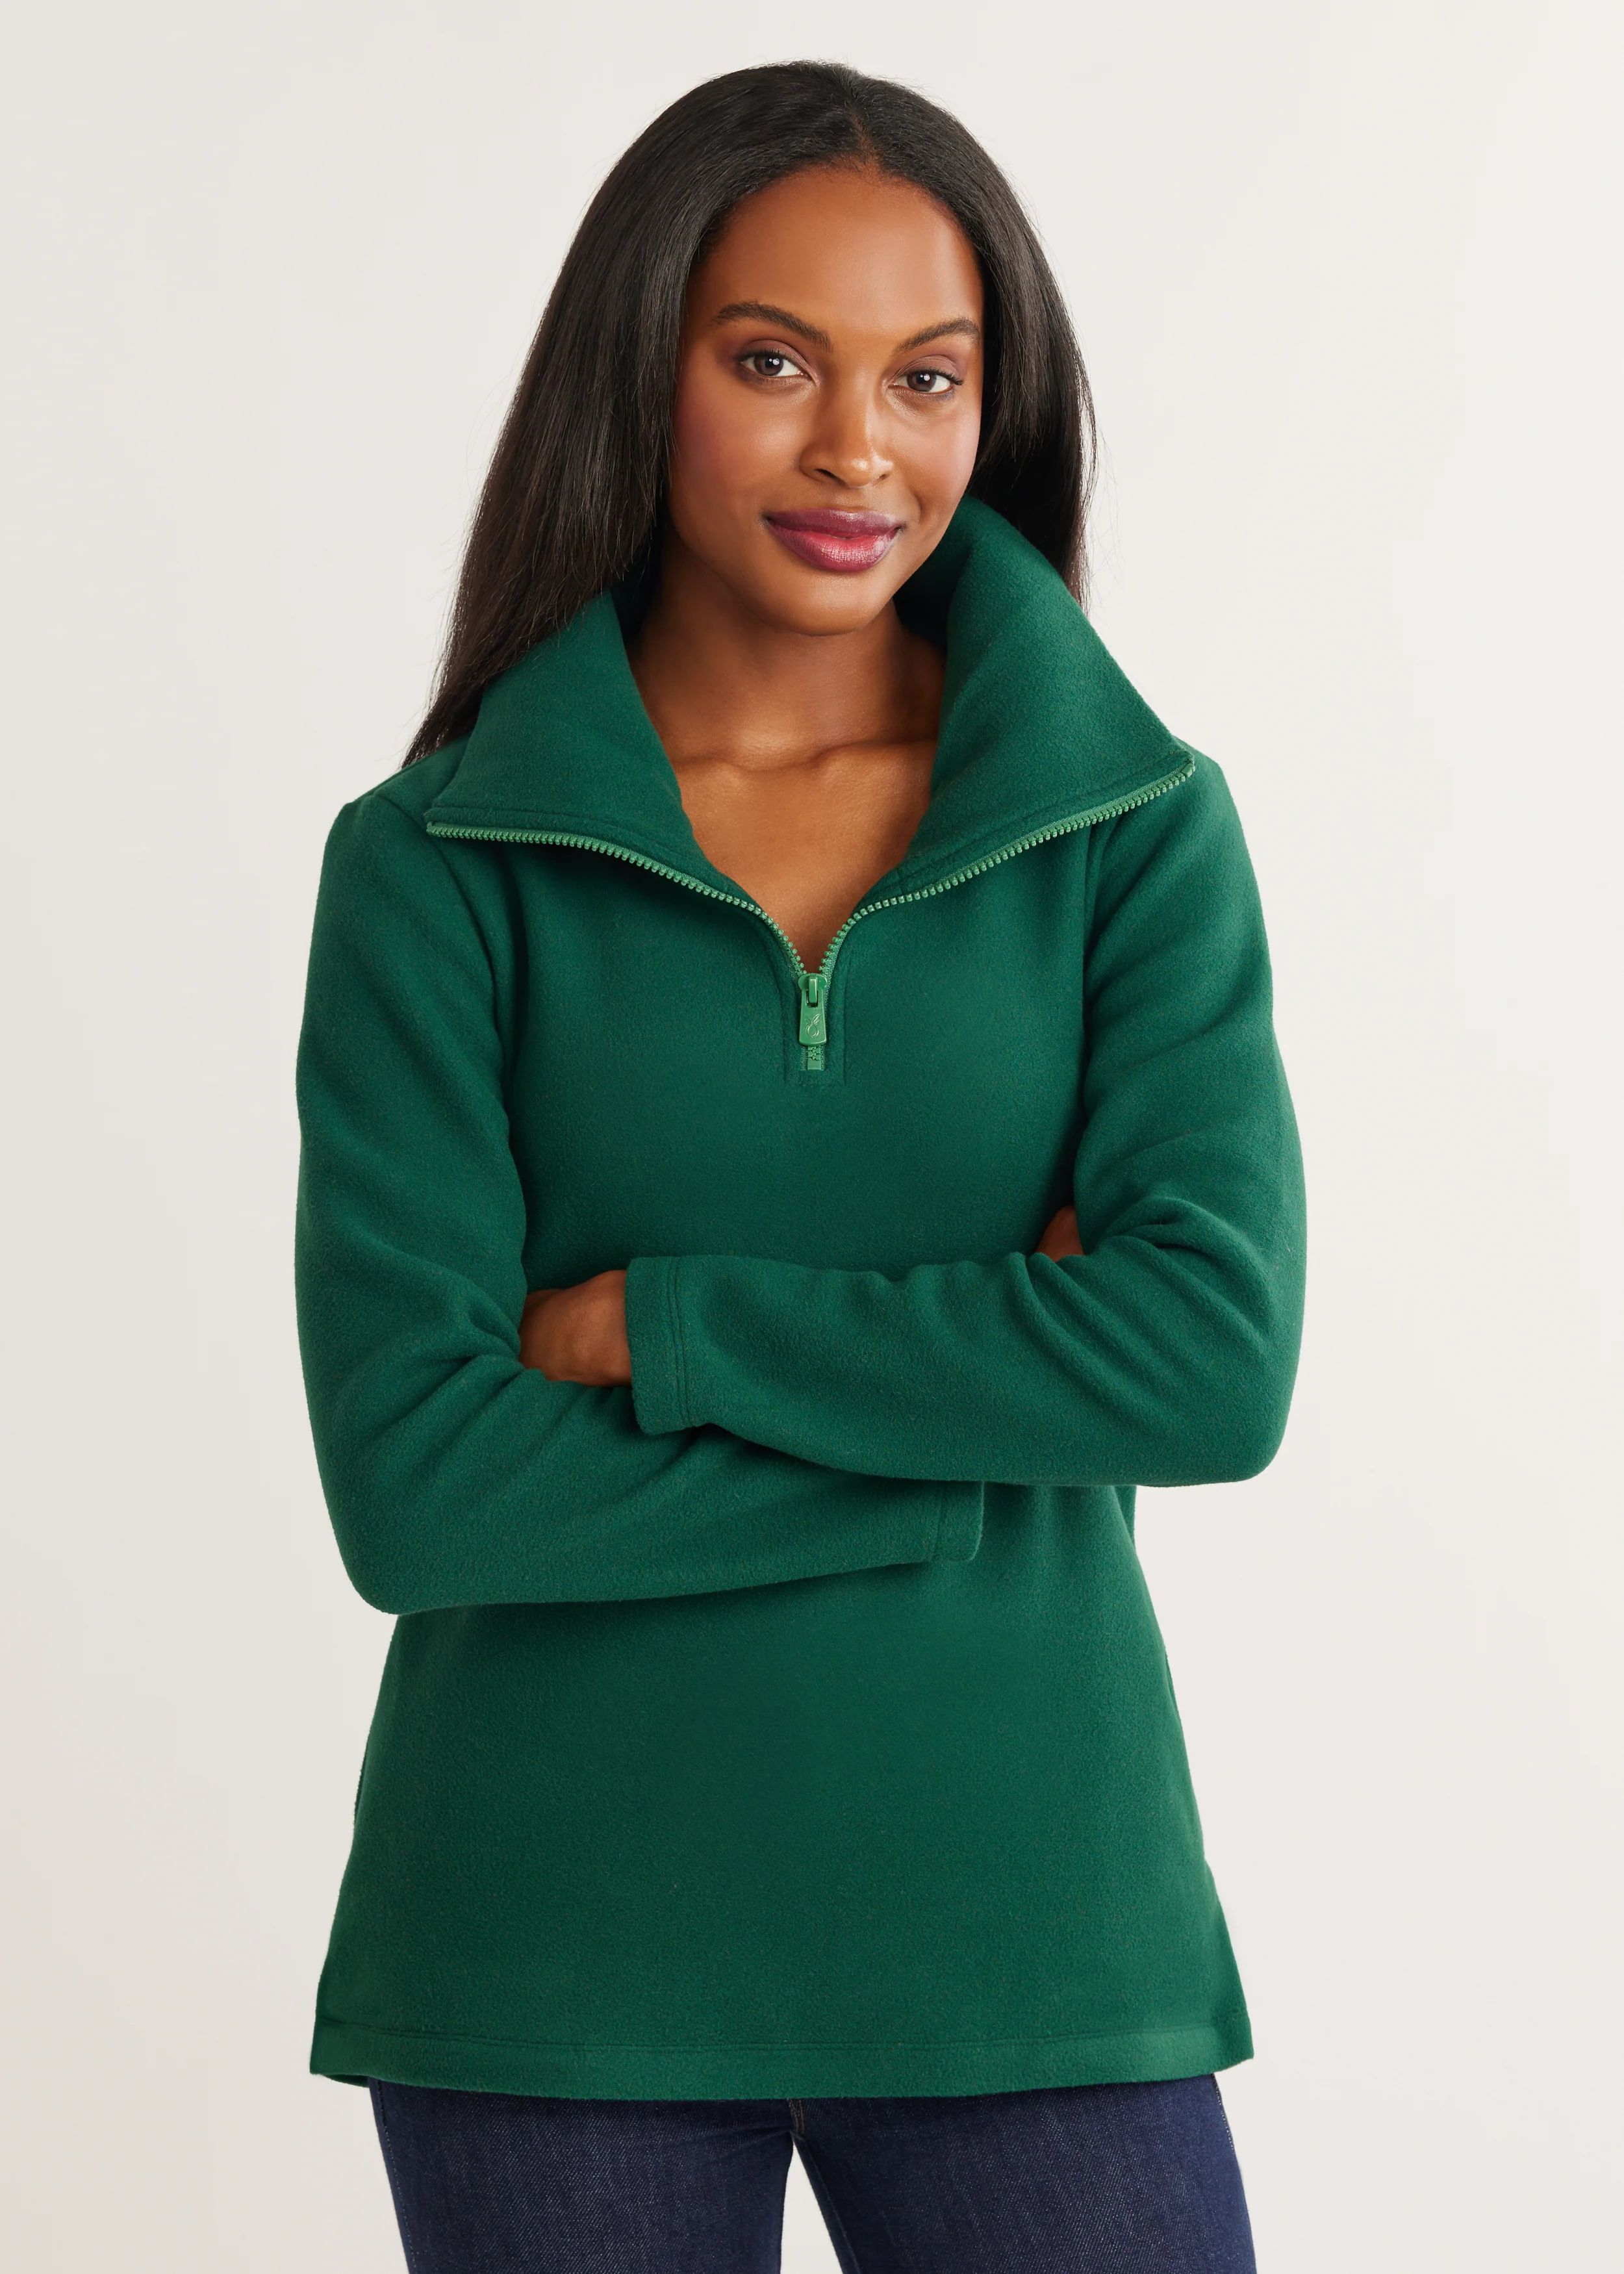 Prospect Pullover in Vello Fleece (Emerald) | Dudley Stephens